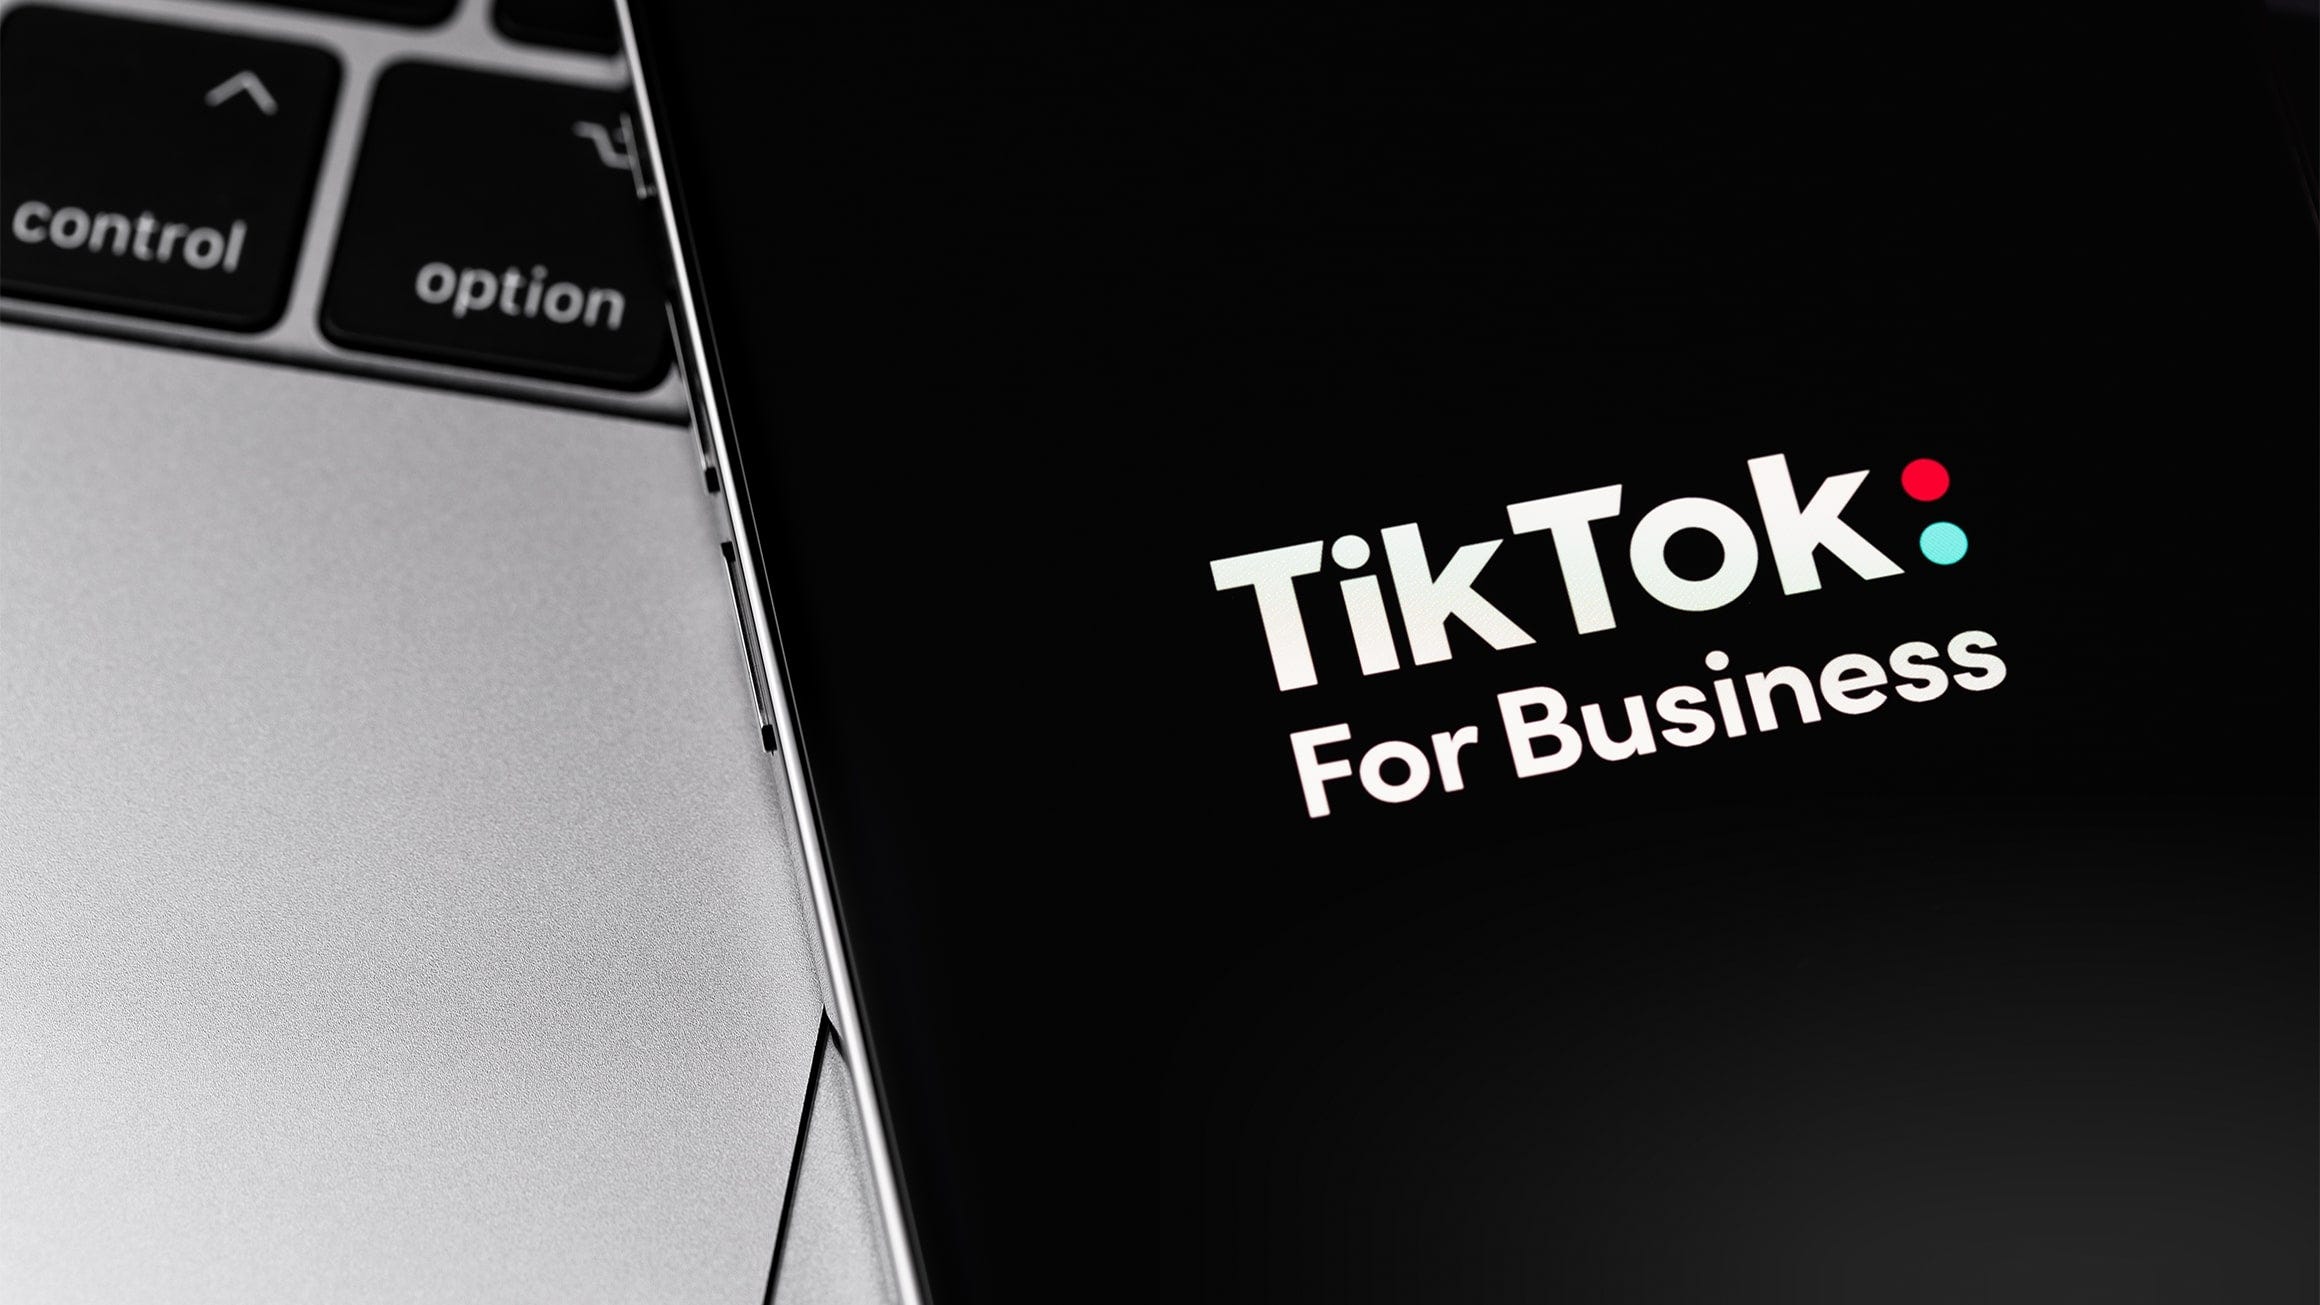 How to Use TikTok to Market Your Brand